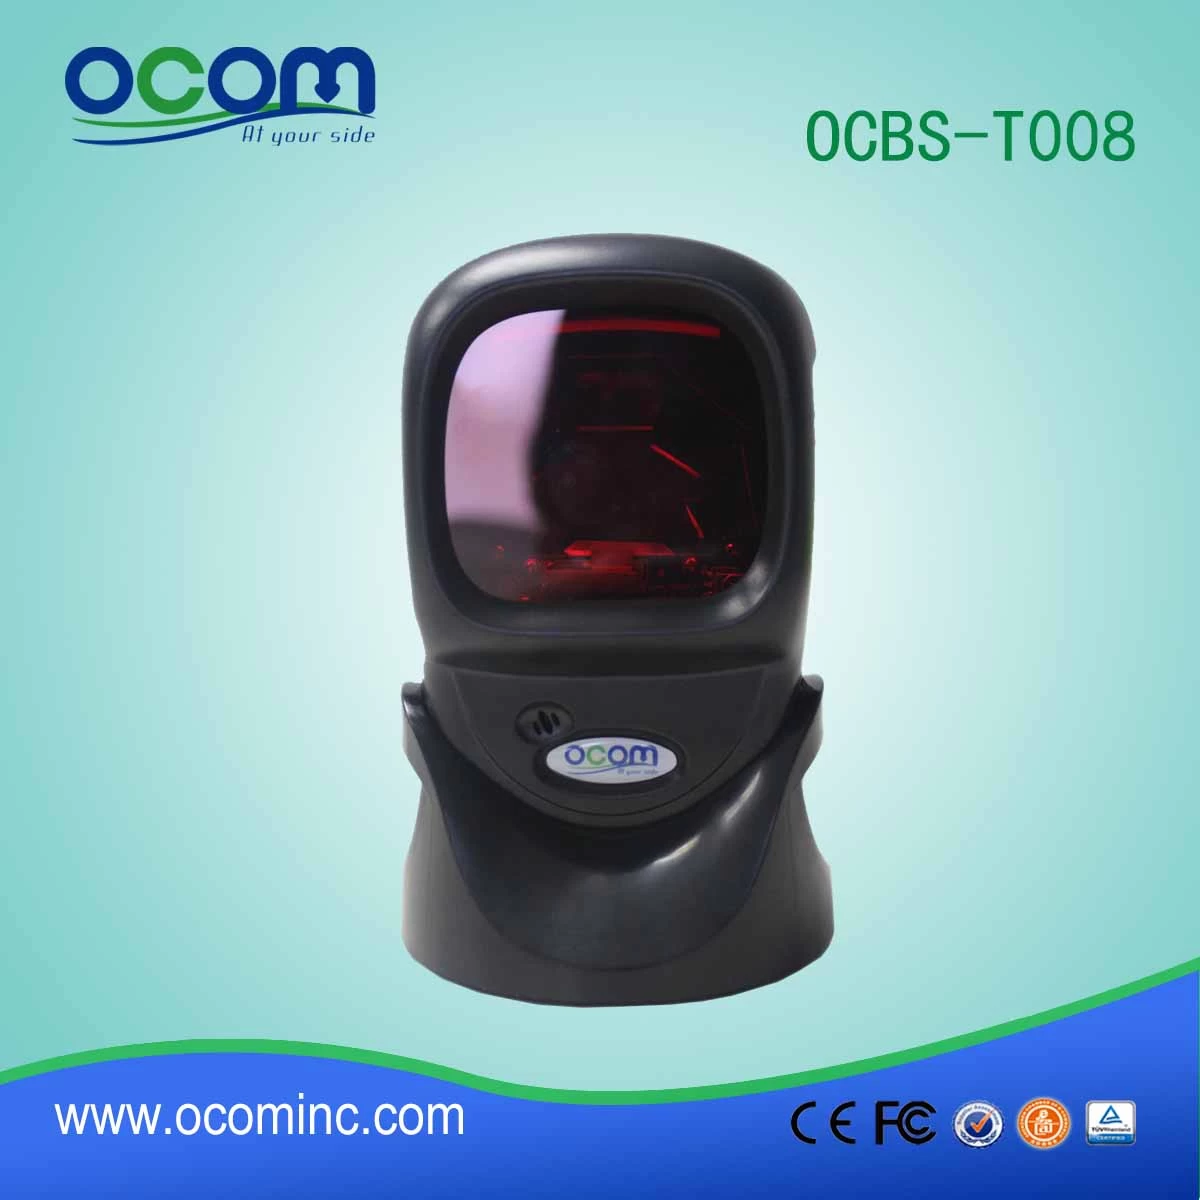 OCBS-T008 Supermarket Omini Cash Register Barcode POS Scanner